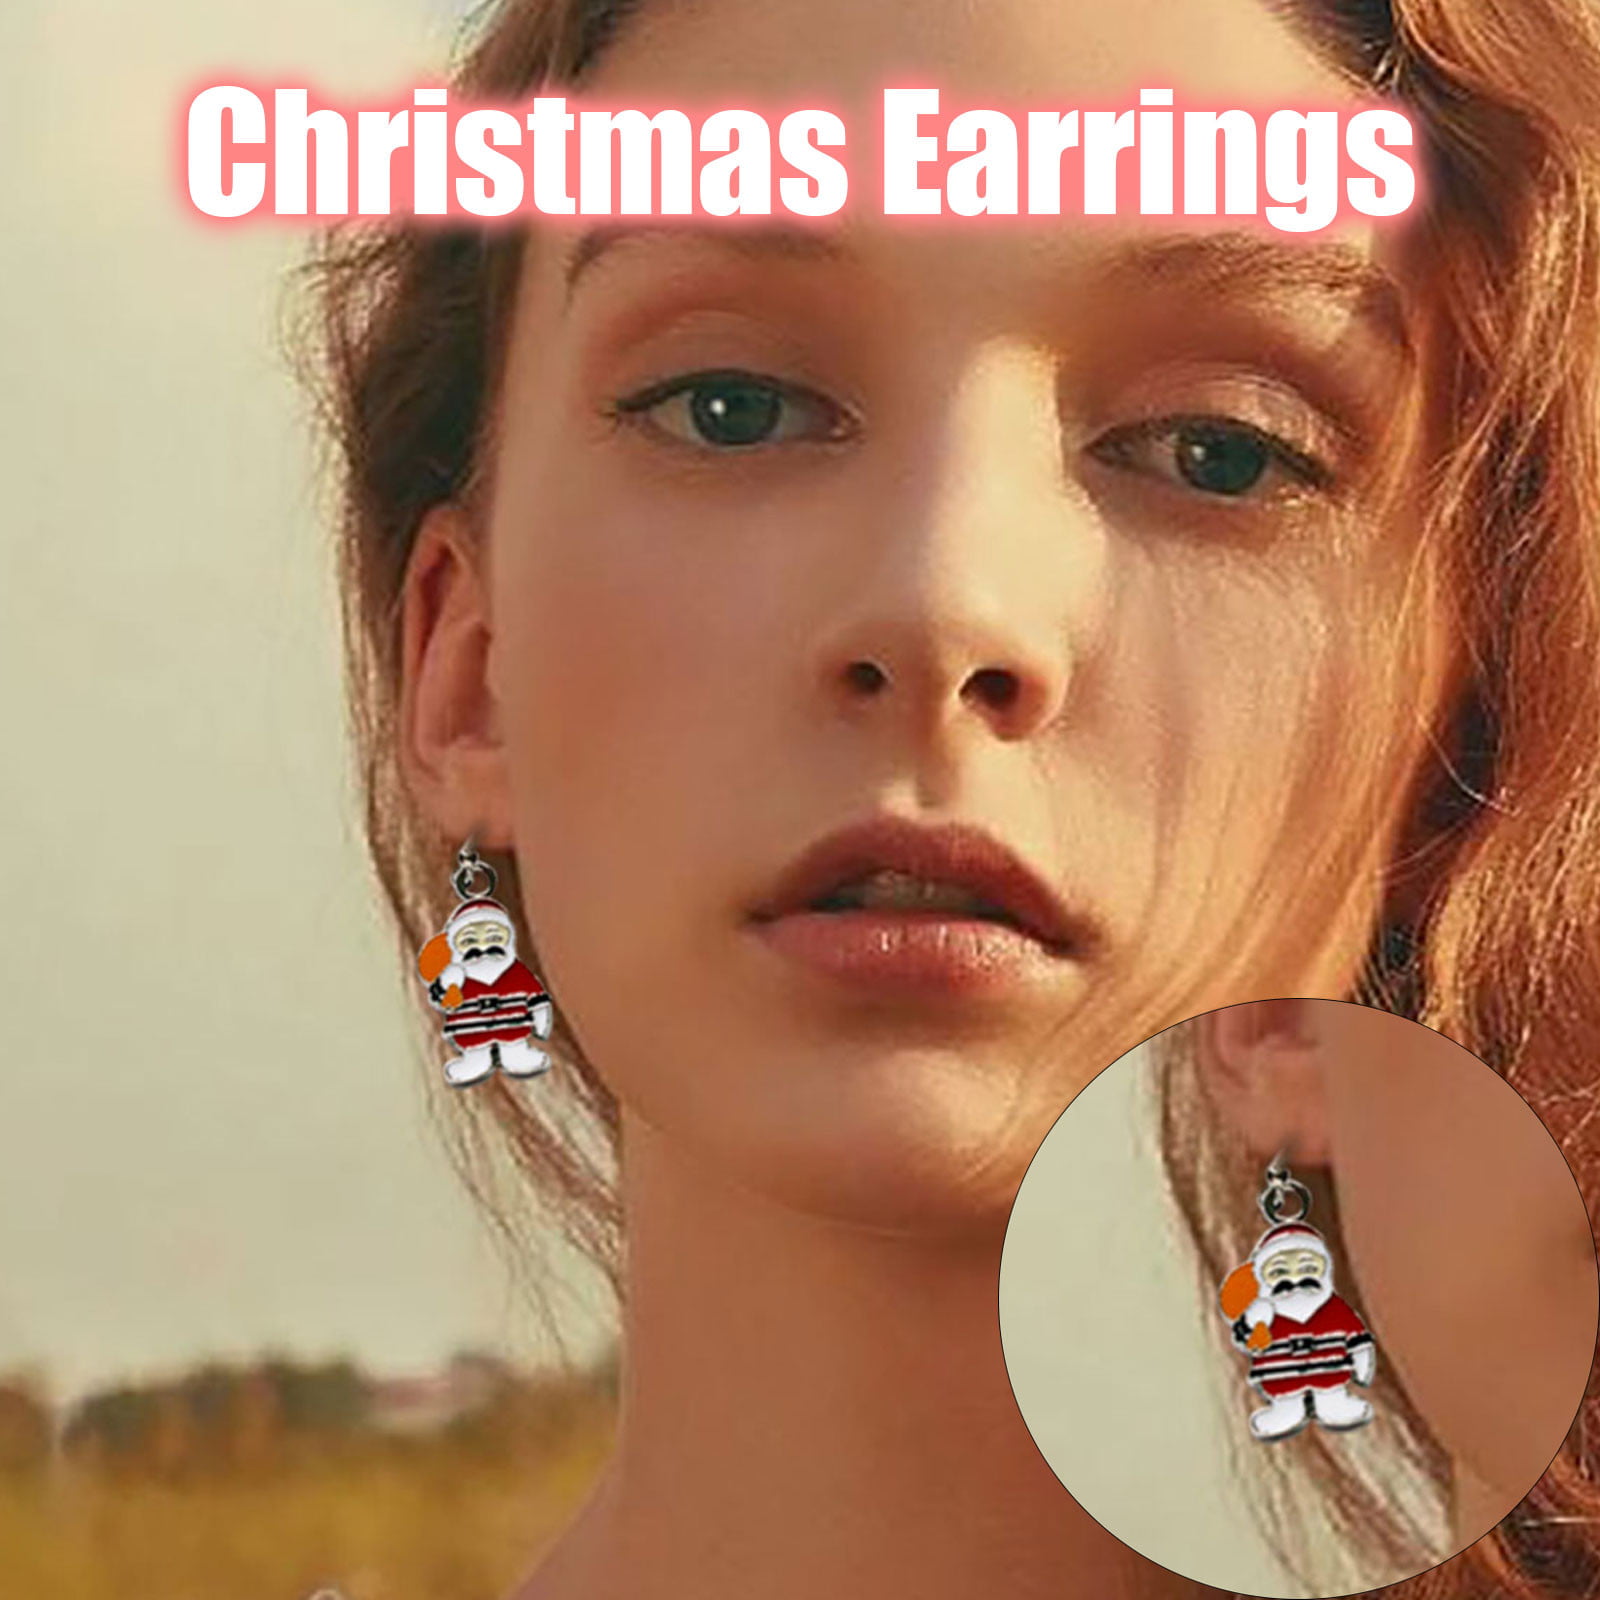 wearing Christmas hat with cute dangling star Seasonal snowman earrings